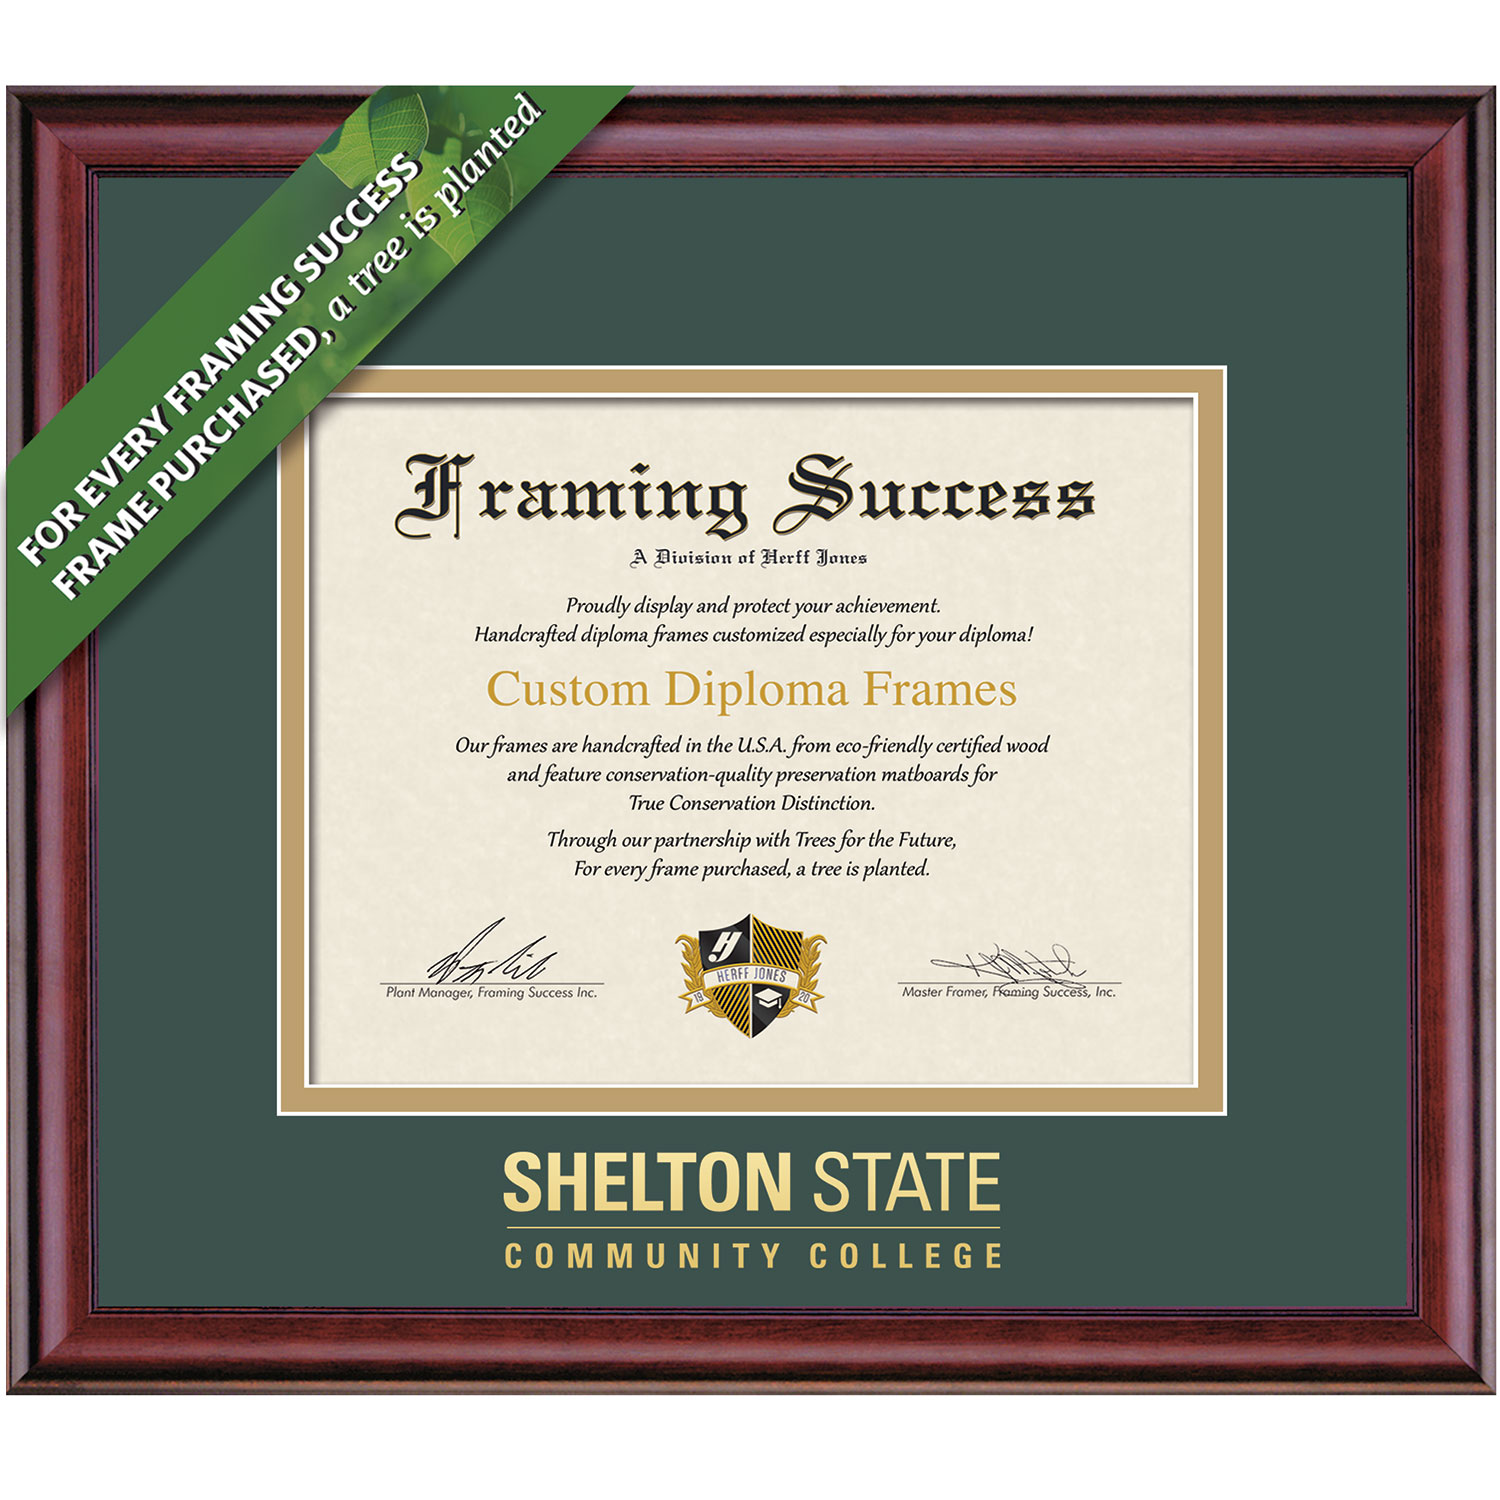 Framing Success 8.5 x 11 Classic Gold Embossed School Name Associates Diploma Frame